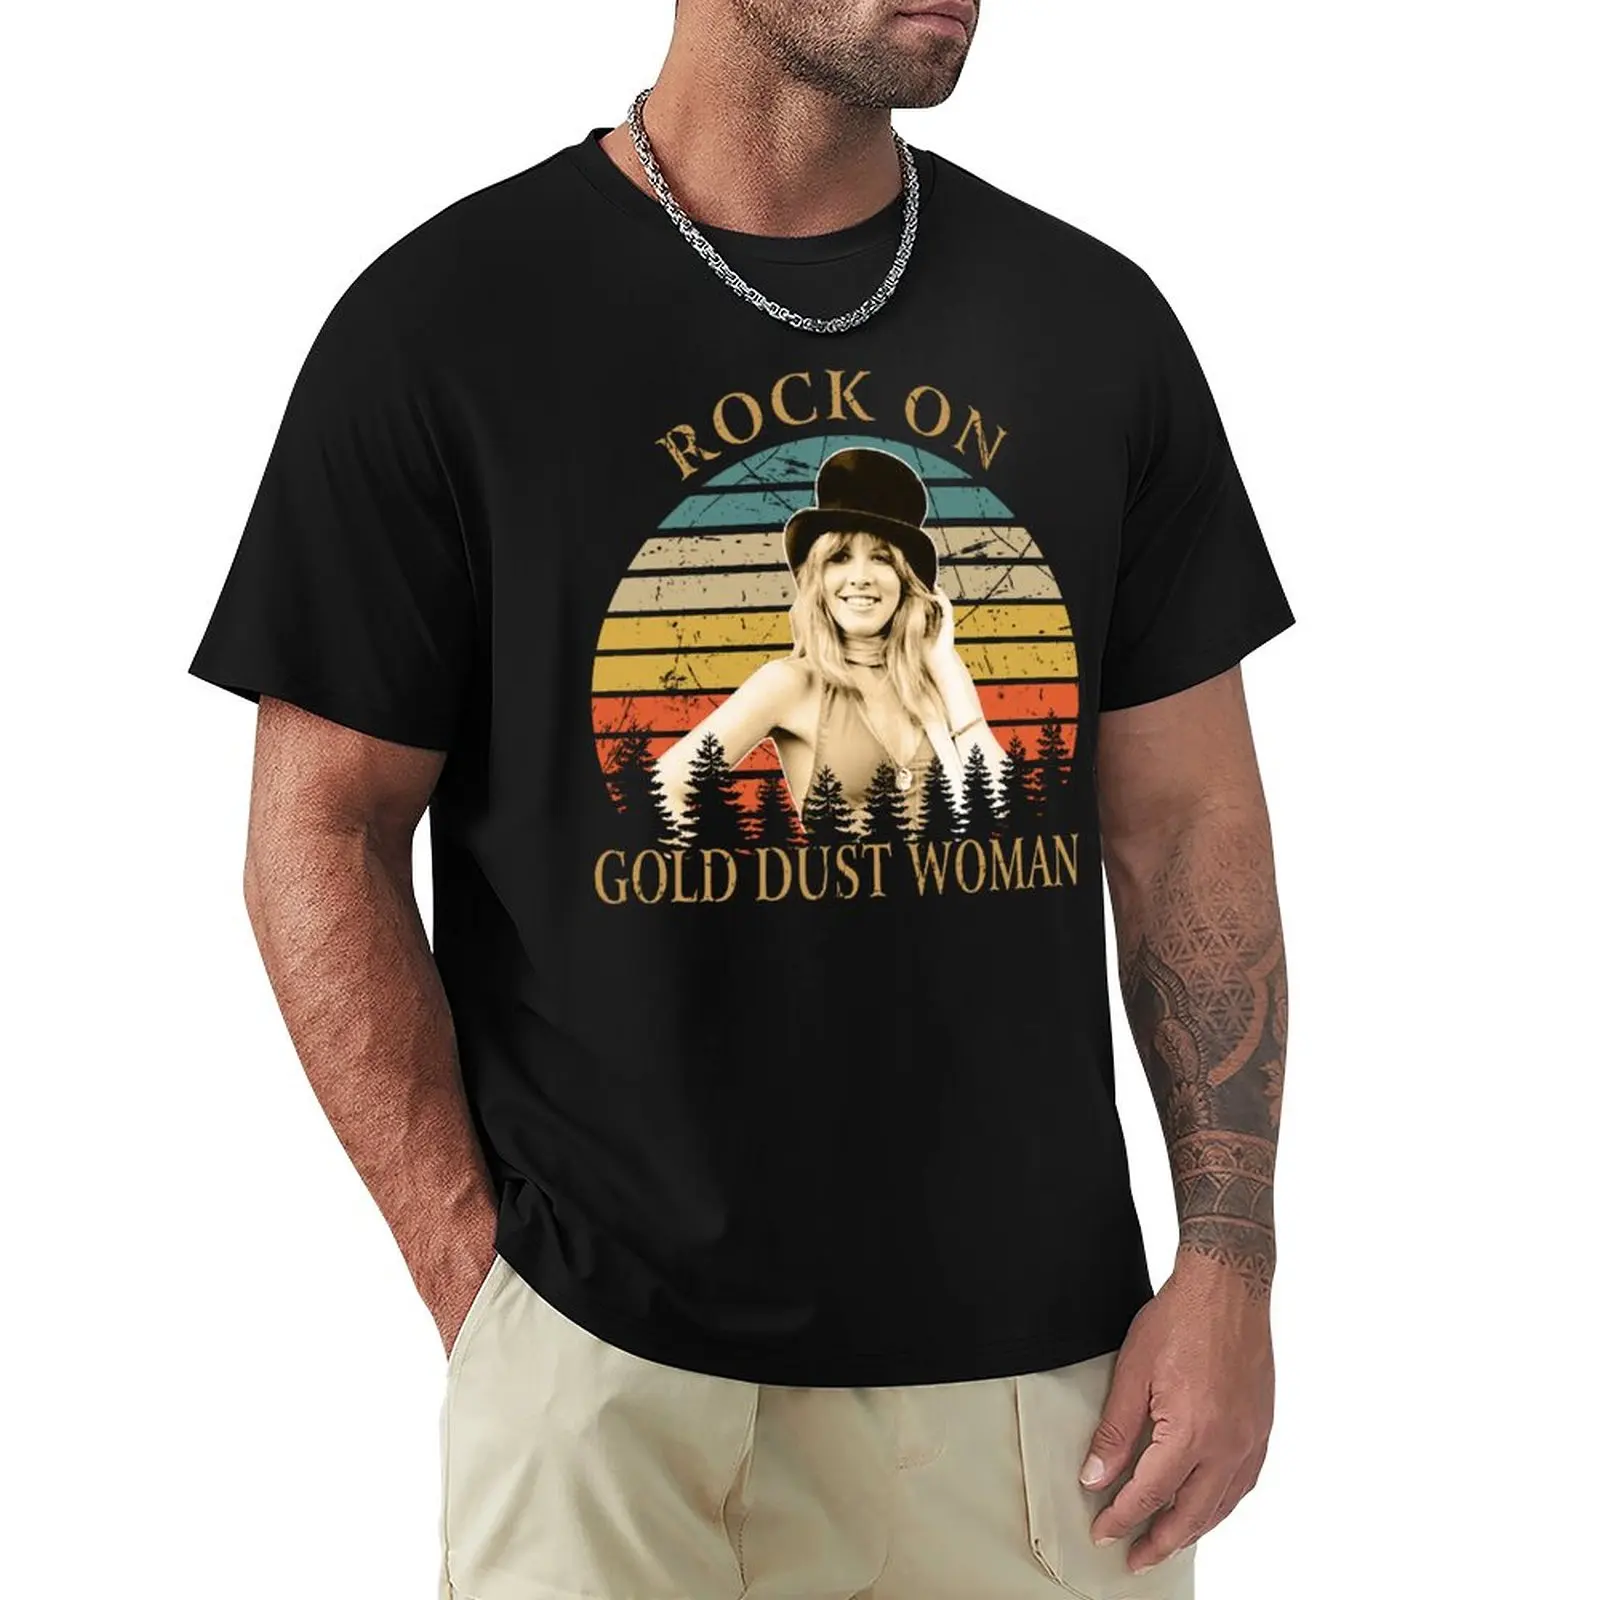 Rock On Gold Dust Woman, футболка Стиви Никс Для мужчин, женская футболка для девочек, футболка с животным принтом, футболка для мальчиков, мужская футболка с рисунком